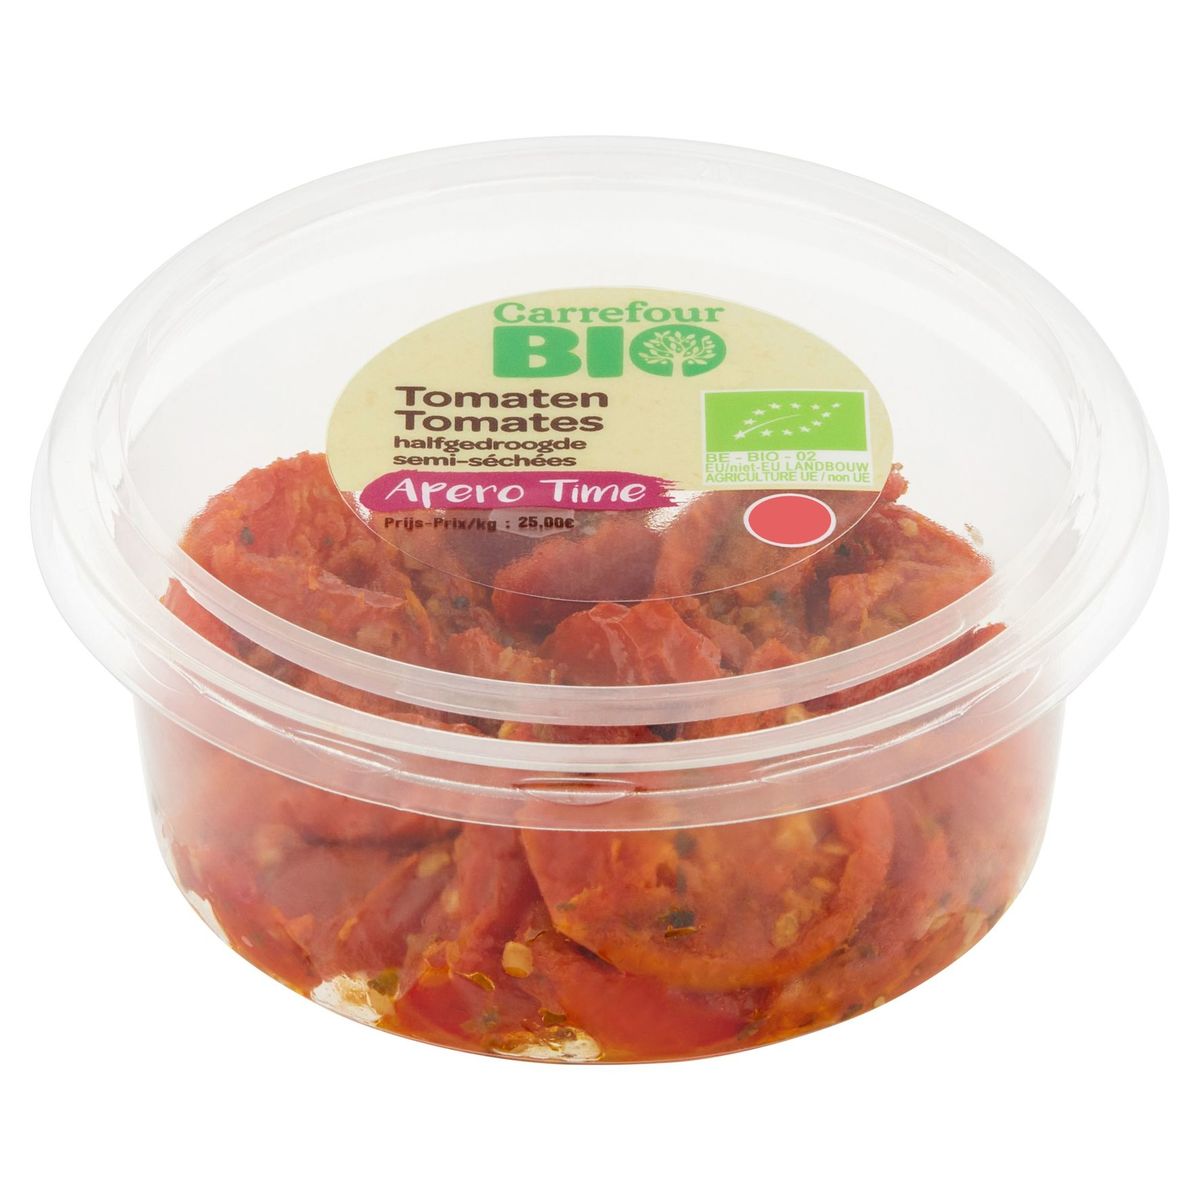 Carrefour Bio Apero Time Tomaten Halfgedroogde 100 g